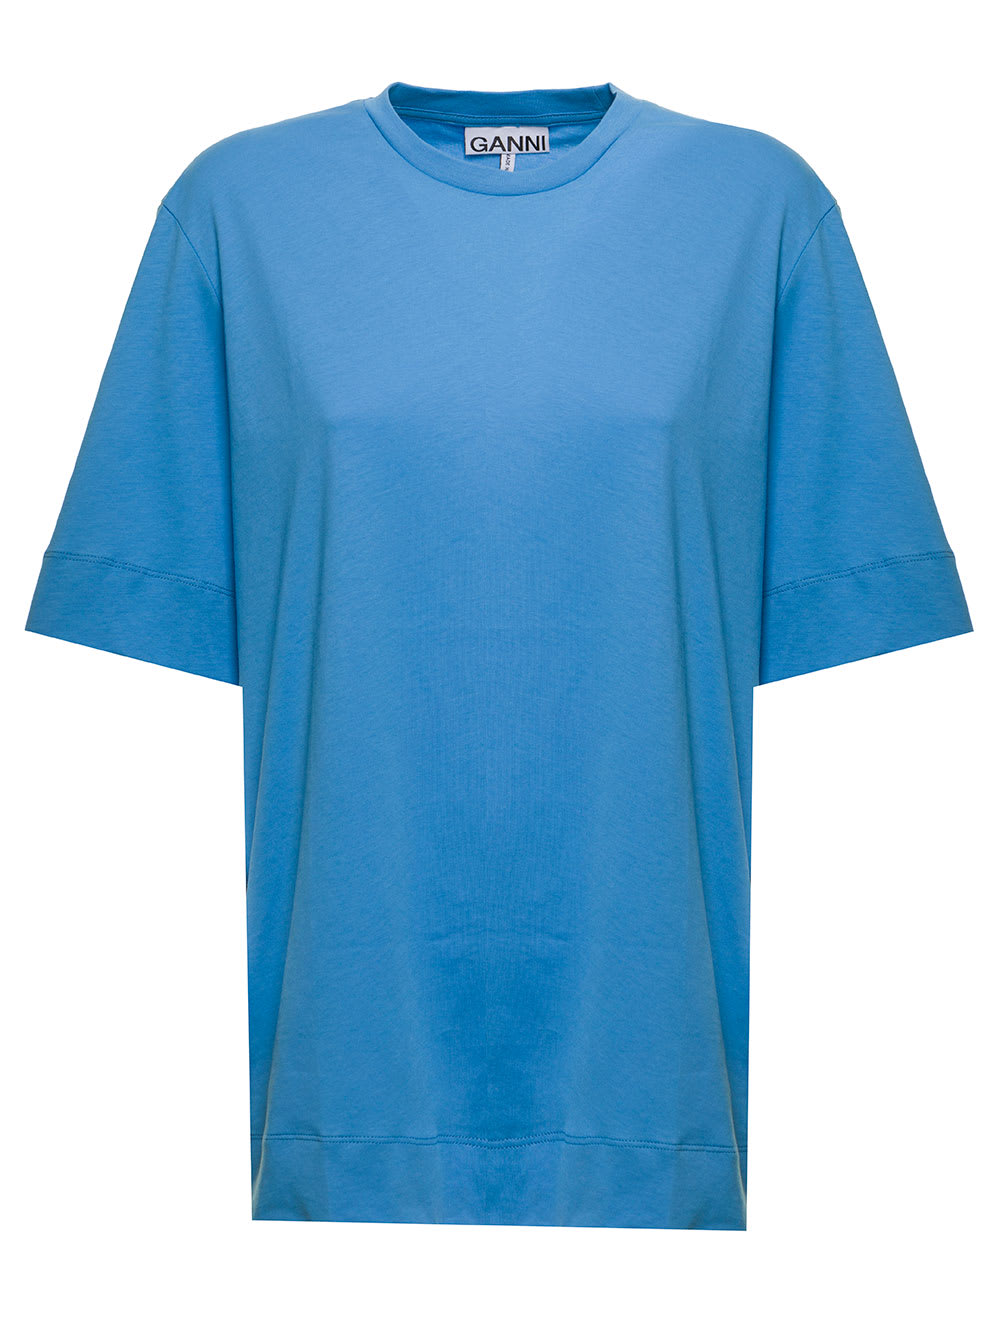 Ganni Woman Light Blue Cotton Crew Neck T-shirt